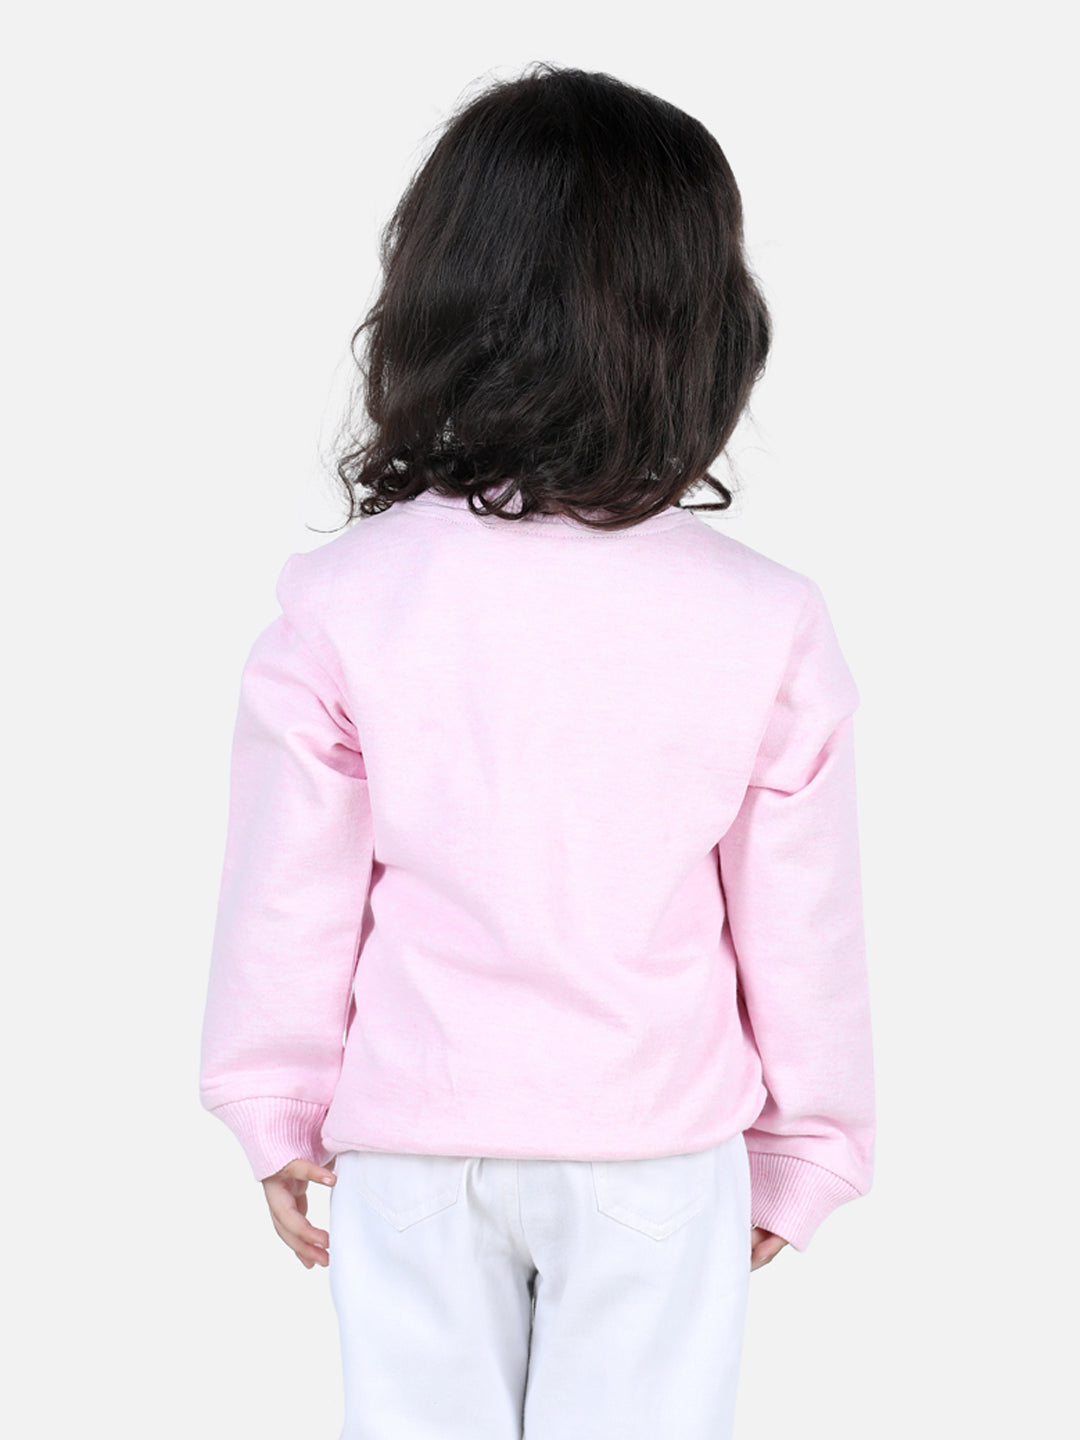 BownBee Full Sleeve Sweatshirt for Girls- Pink